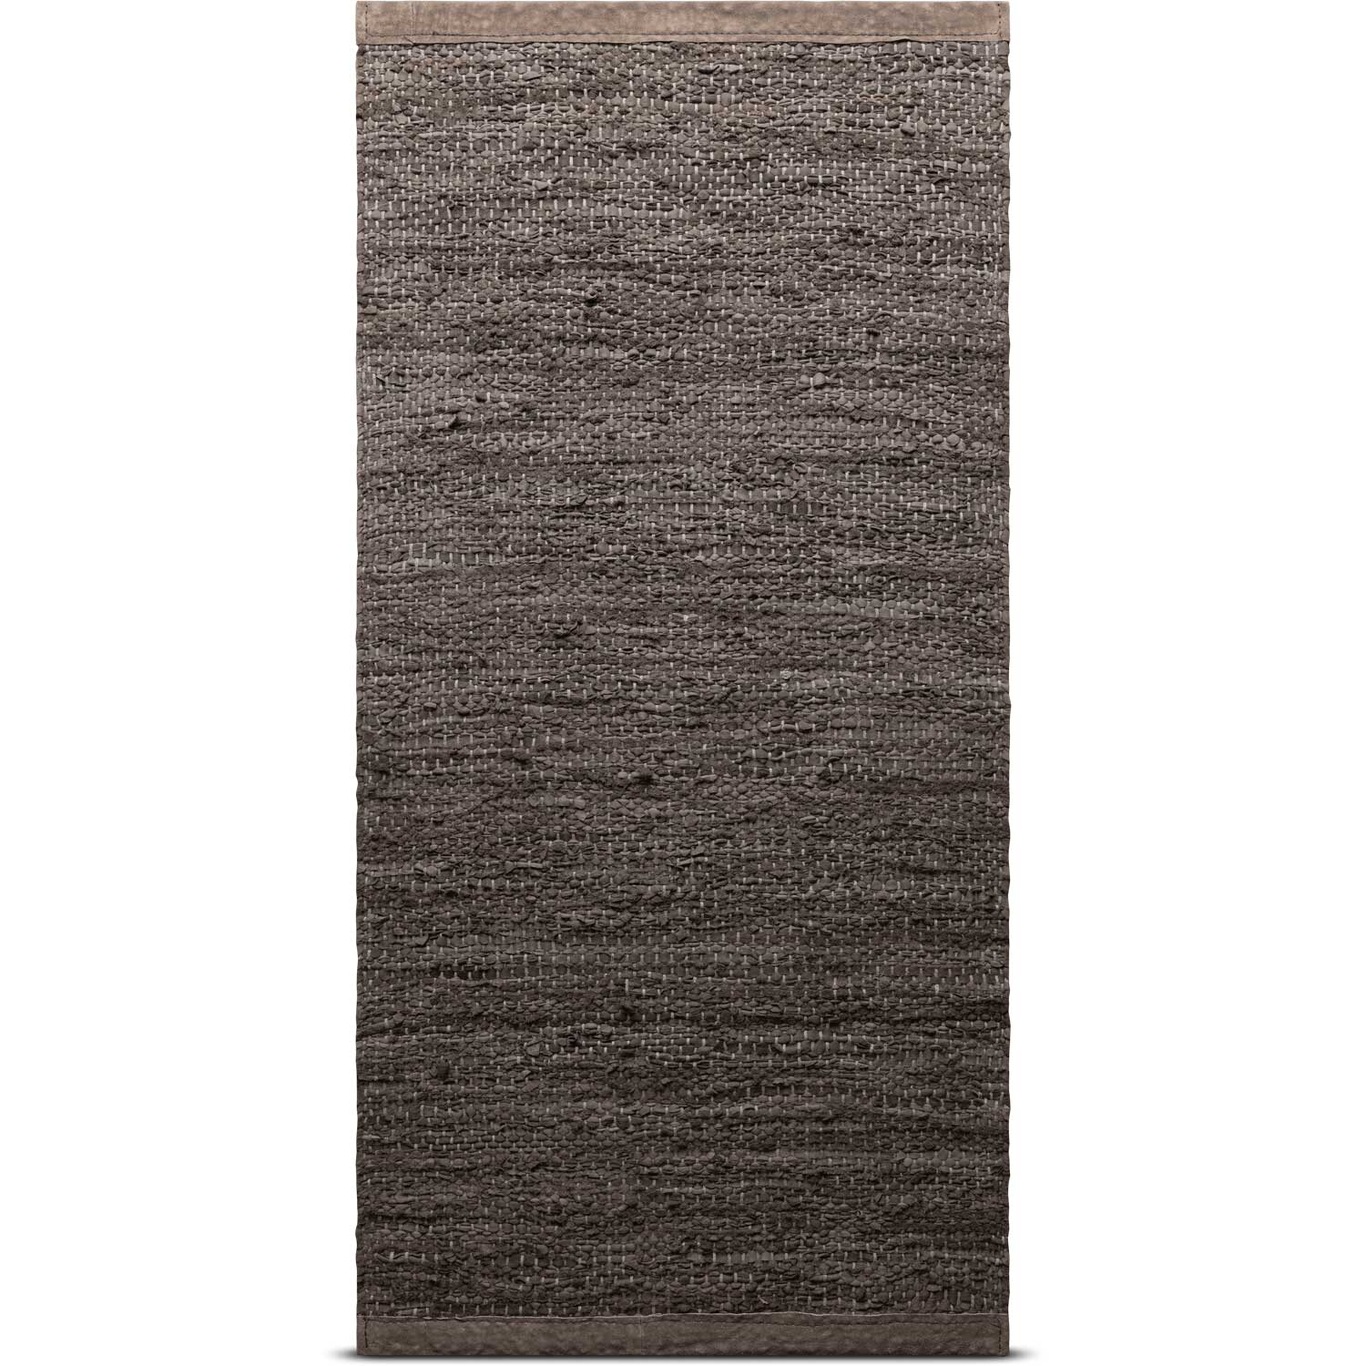 Leather rug 75x300cm, Wood